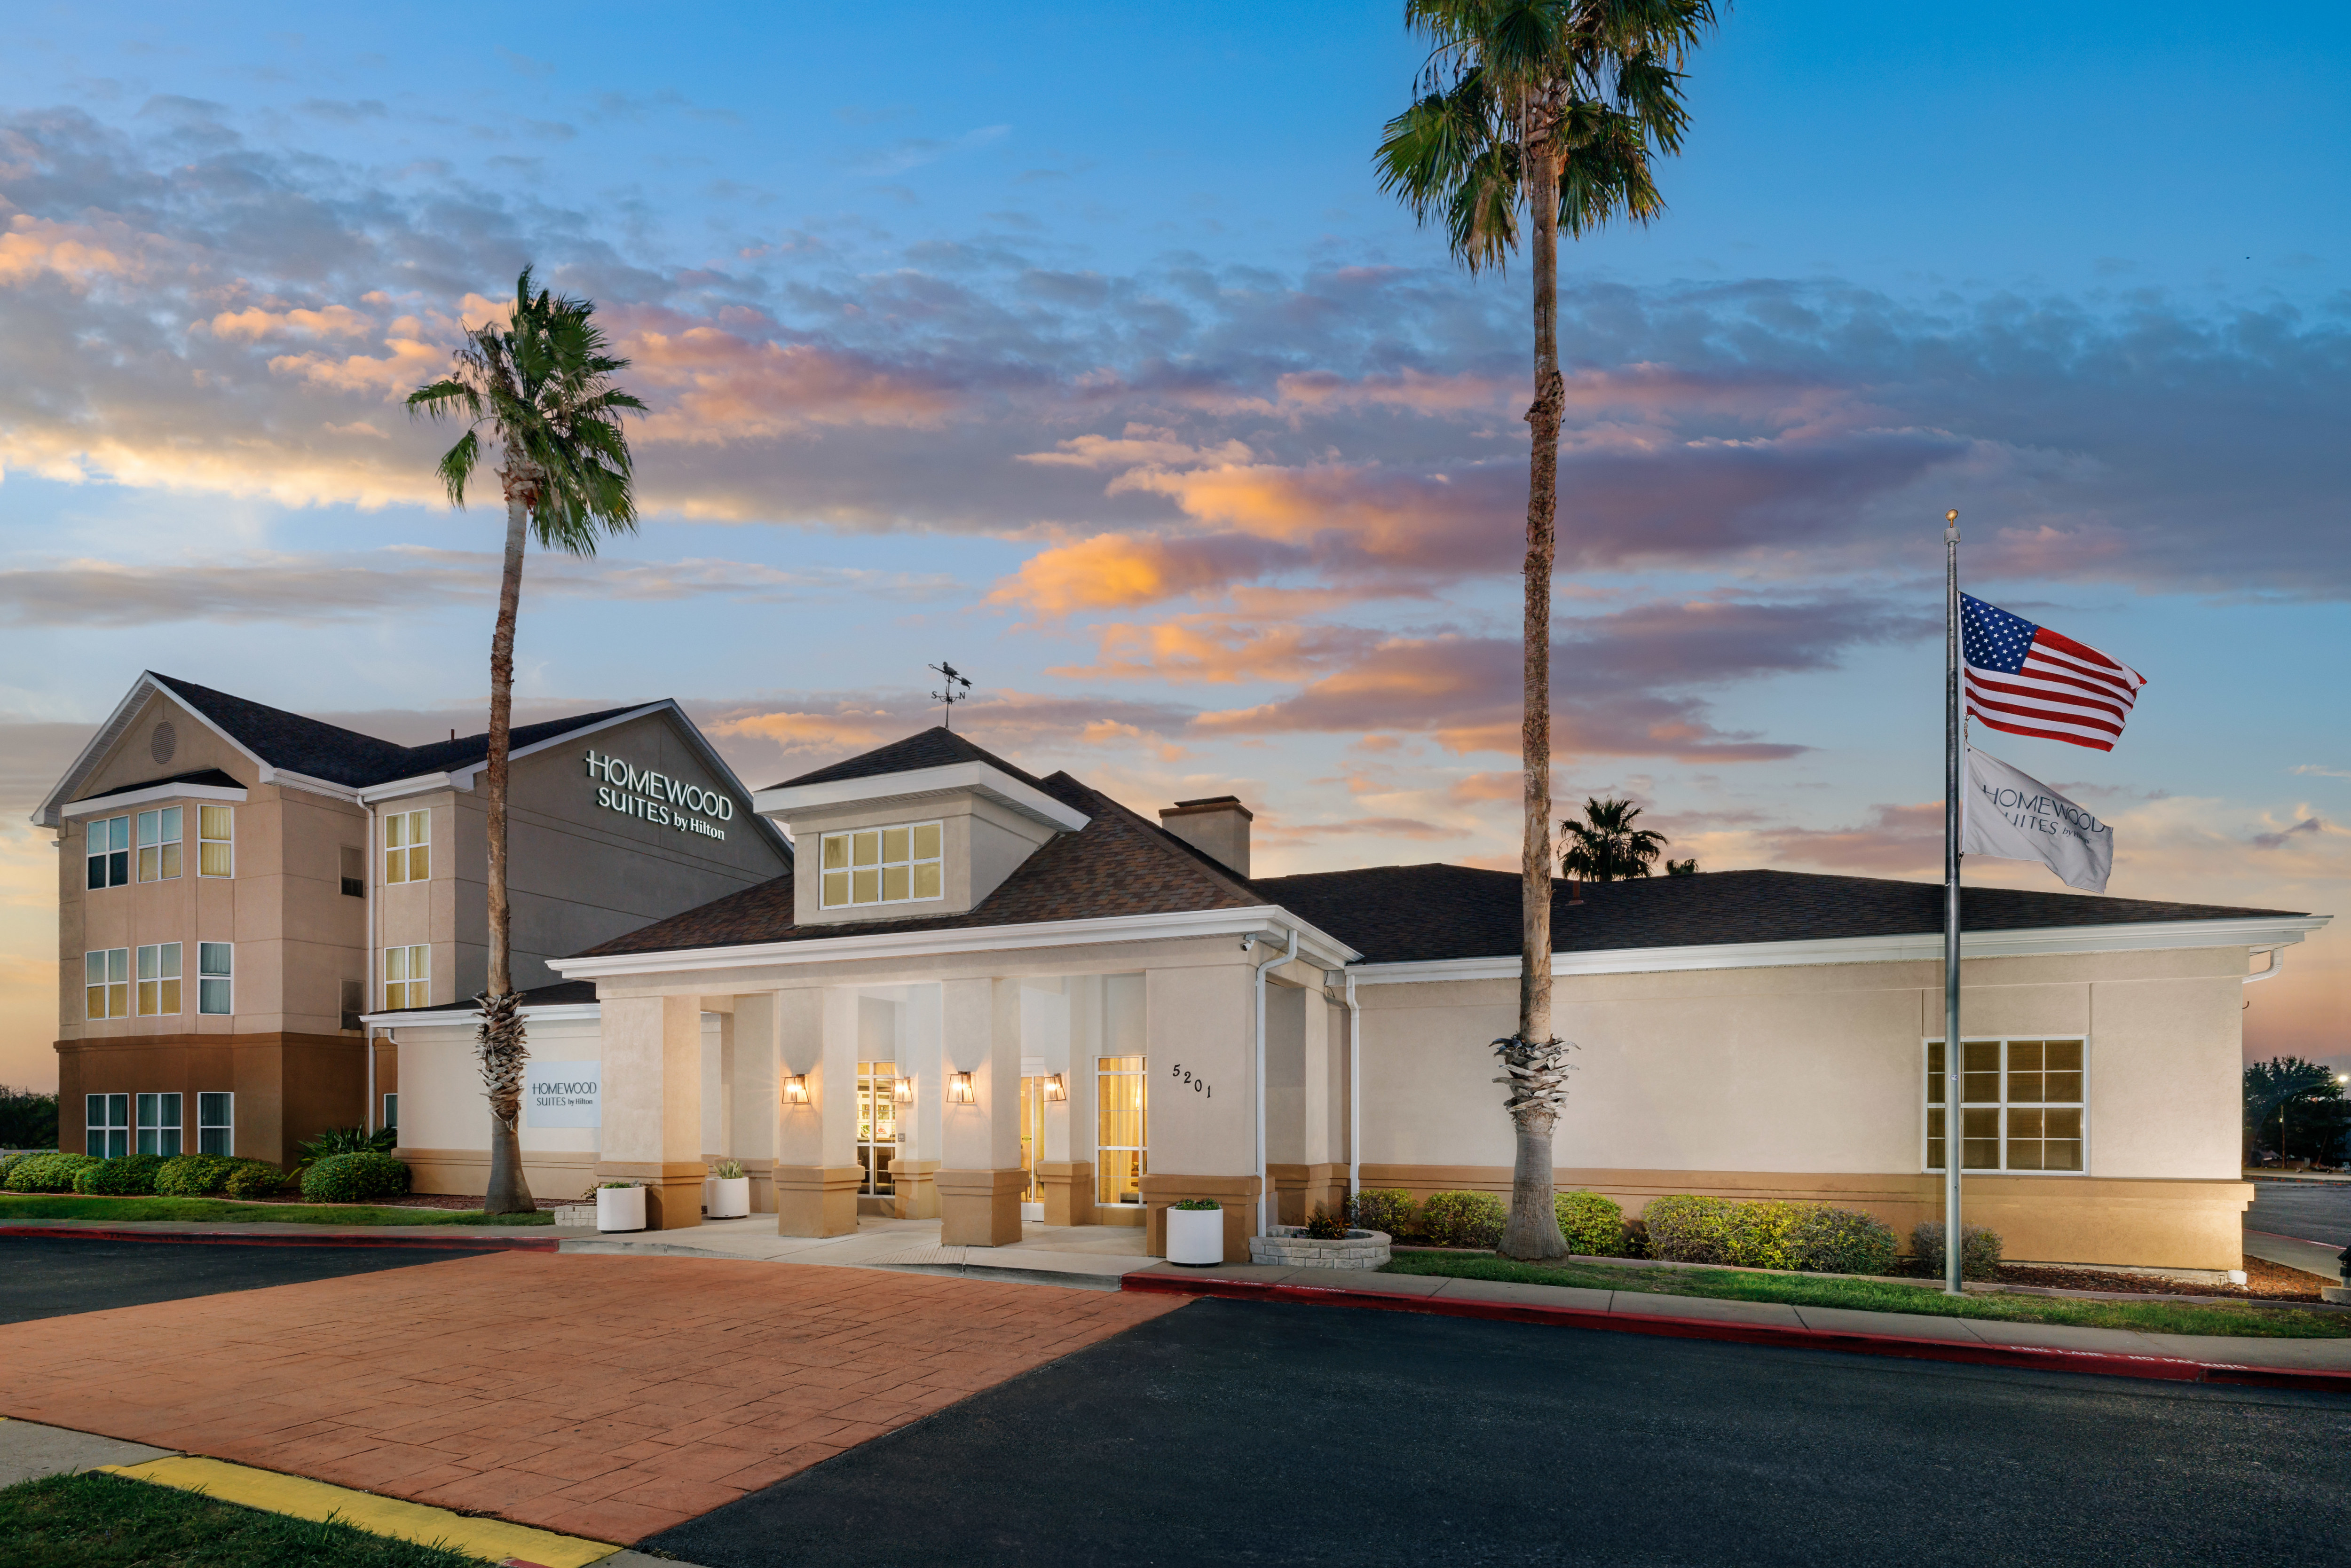 Homewood Suites by Hilton Corpus Christi hotel exterior